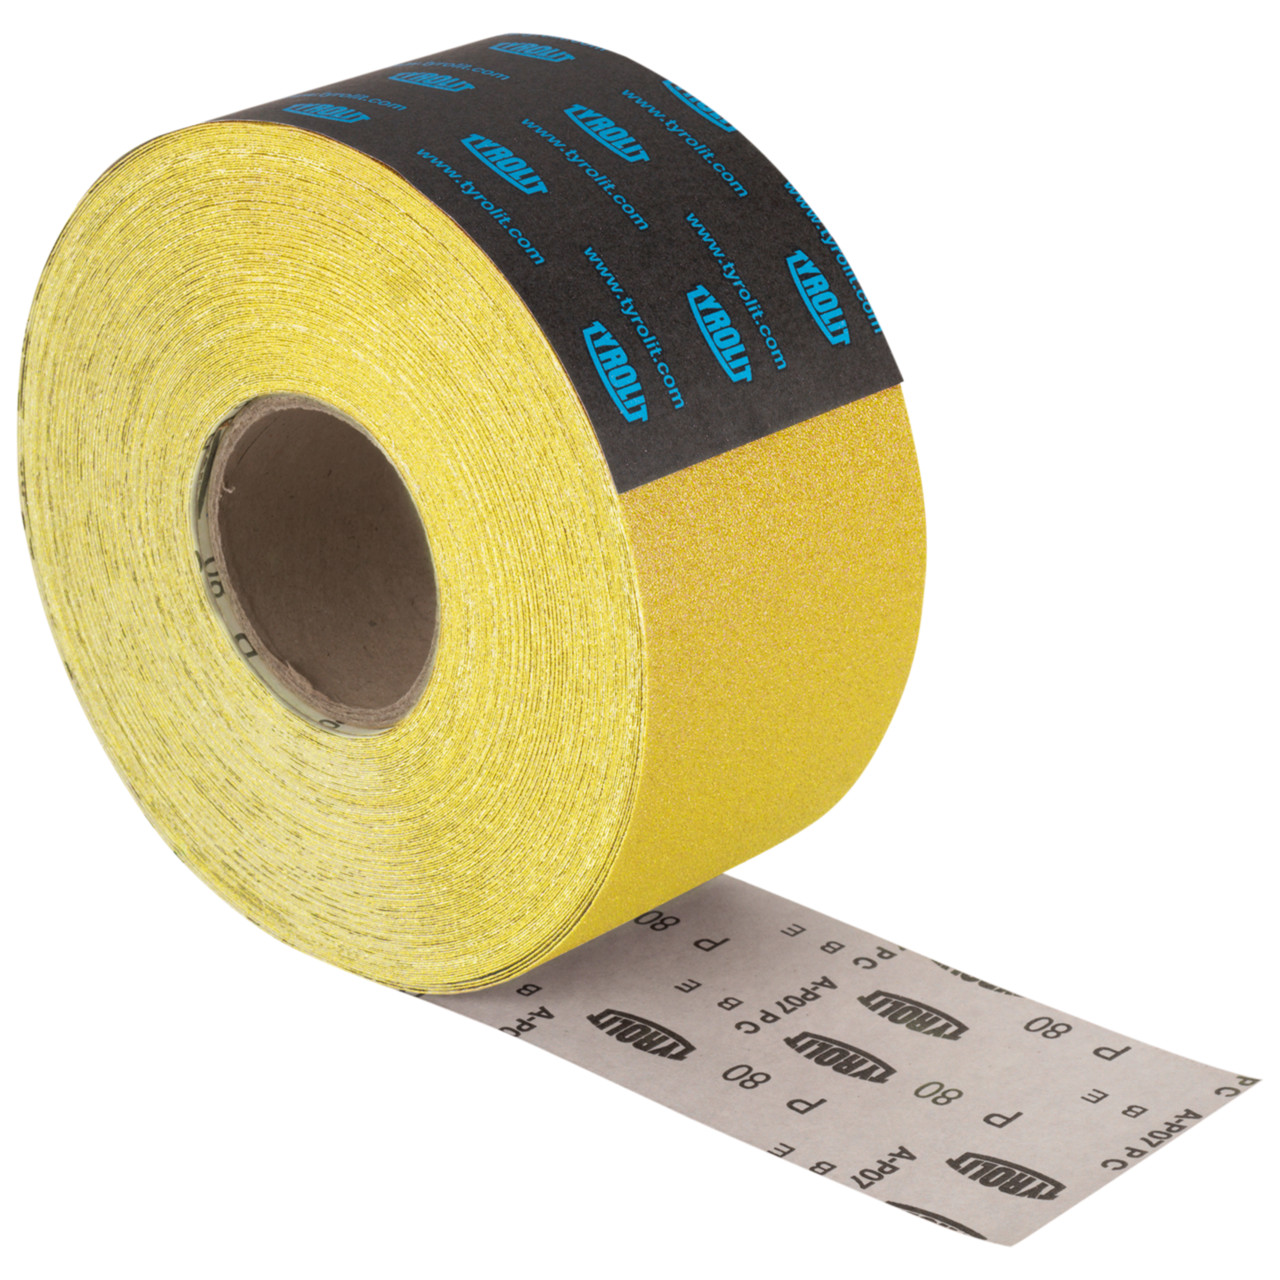 TYROLIT A-P21 D Paper rolls TxH 115x5 For plastic, wood, paint and varnish, P240, shape: ROLL, Art. 34231877